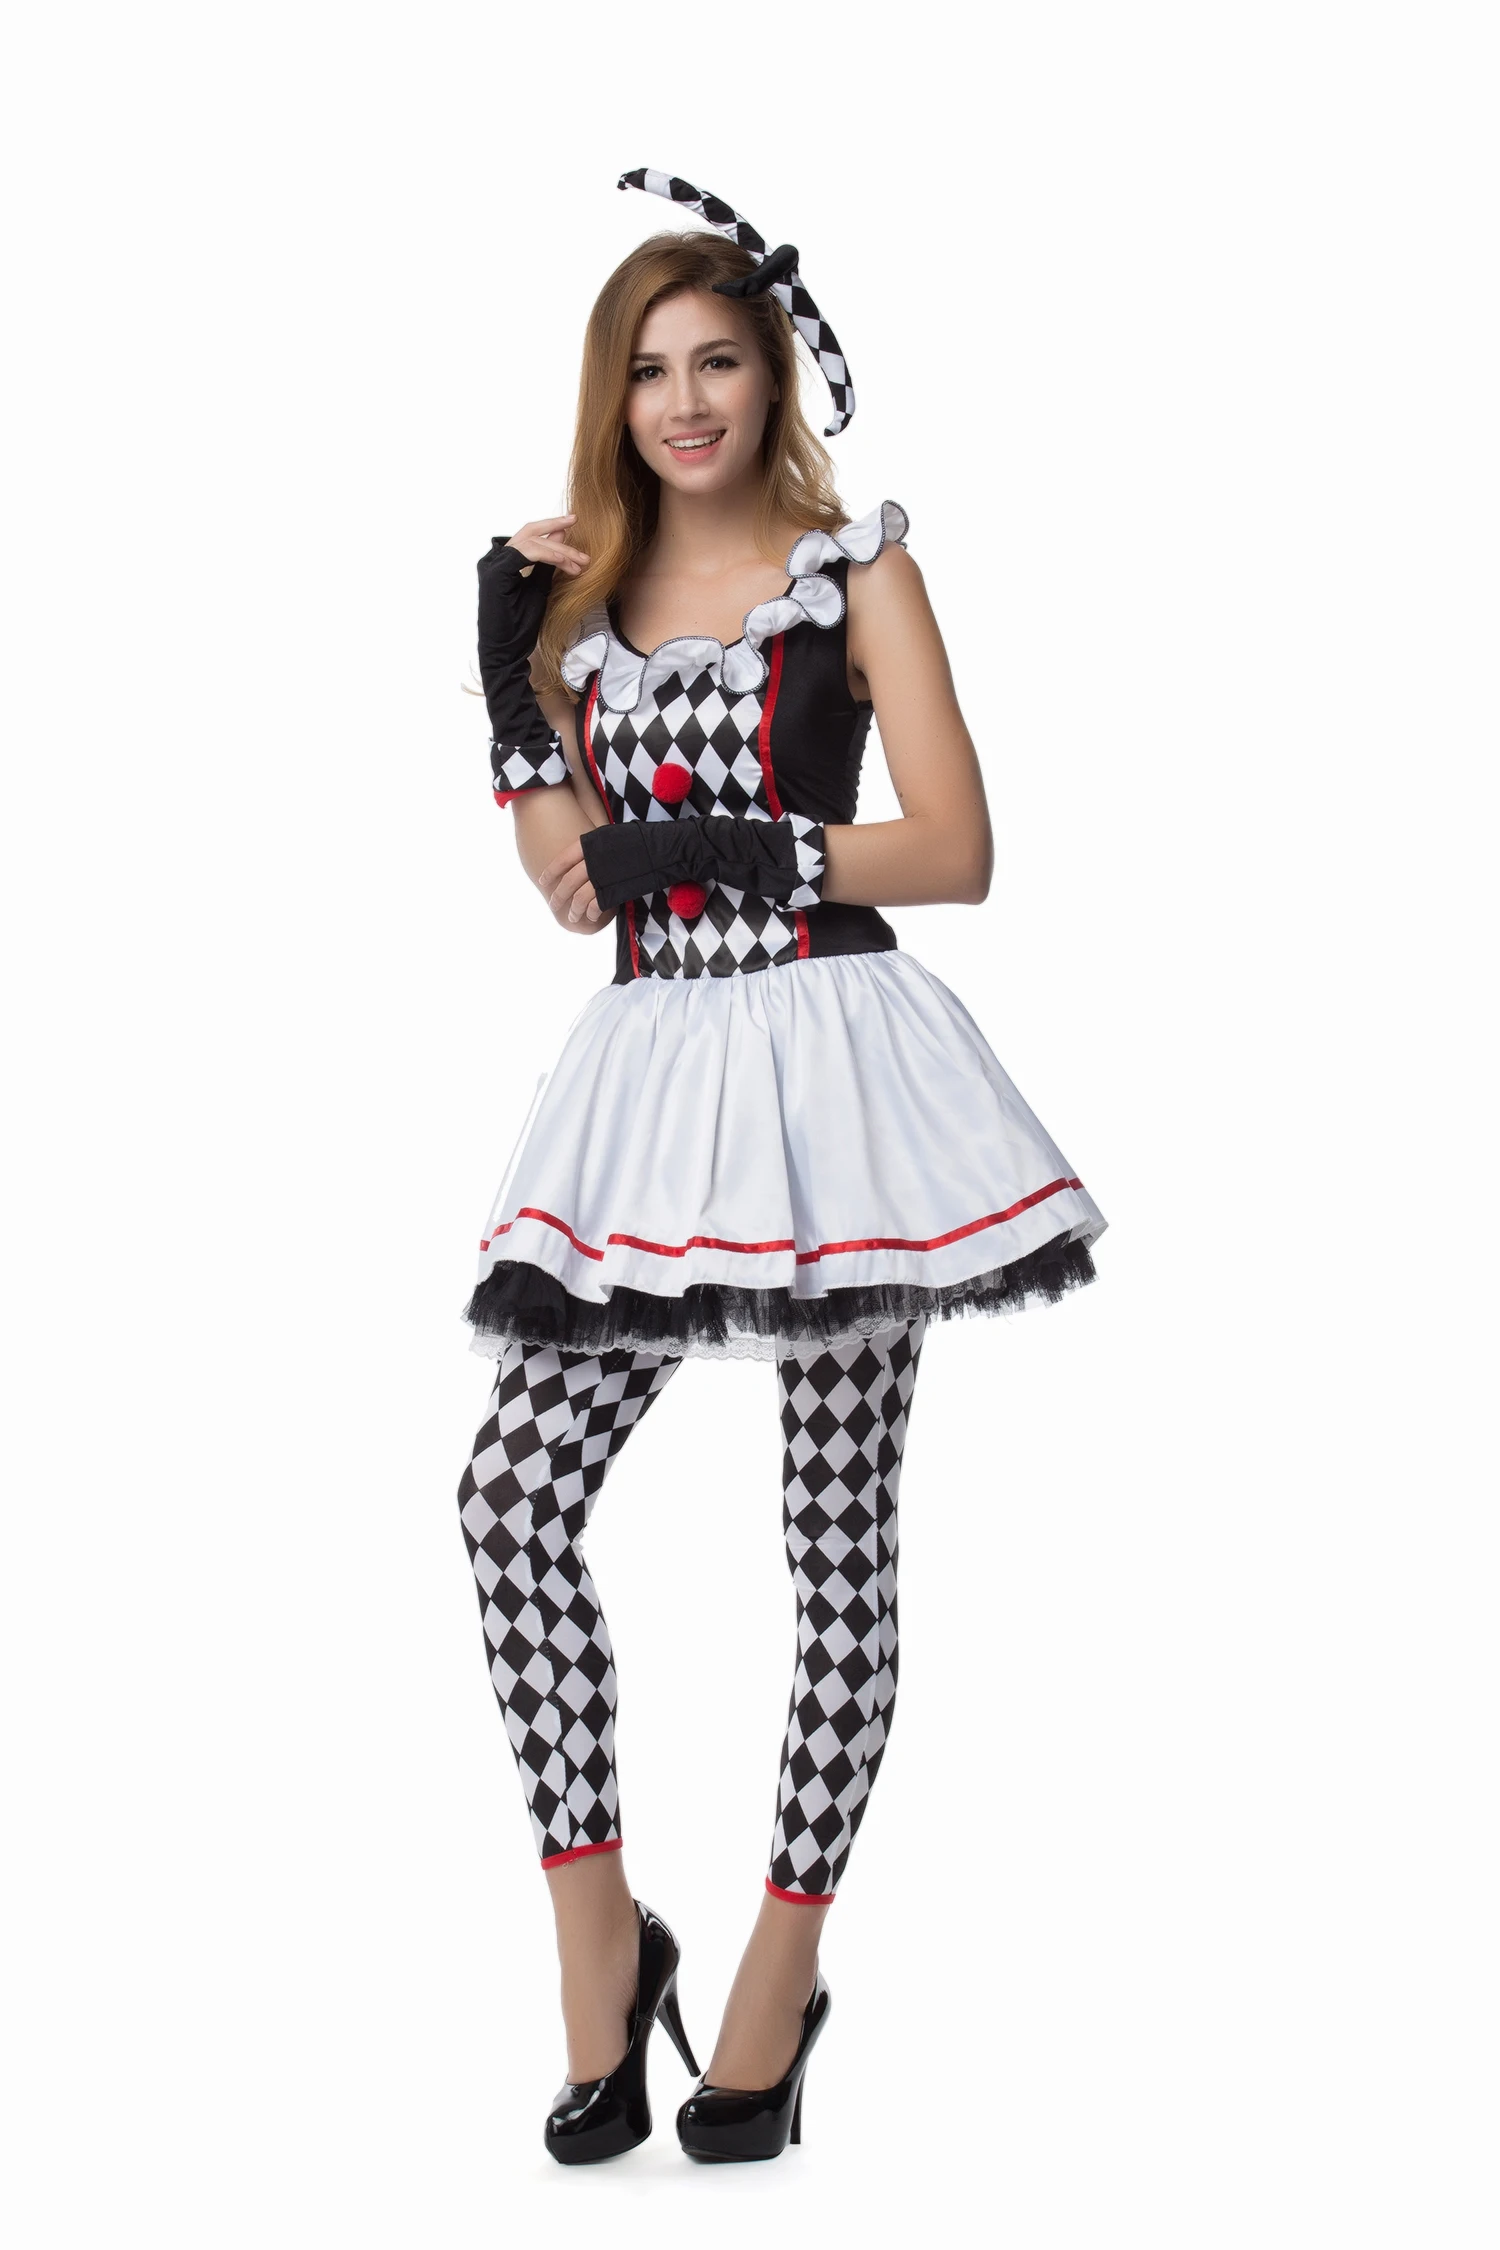 Женский Арлекин шутник, клоун костюм наряд для косплея на Хэллоуин